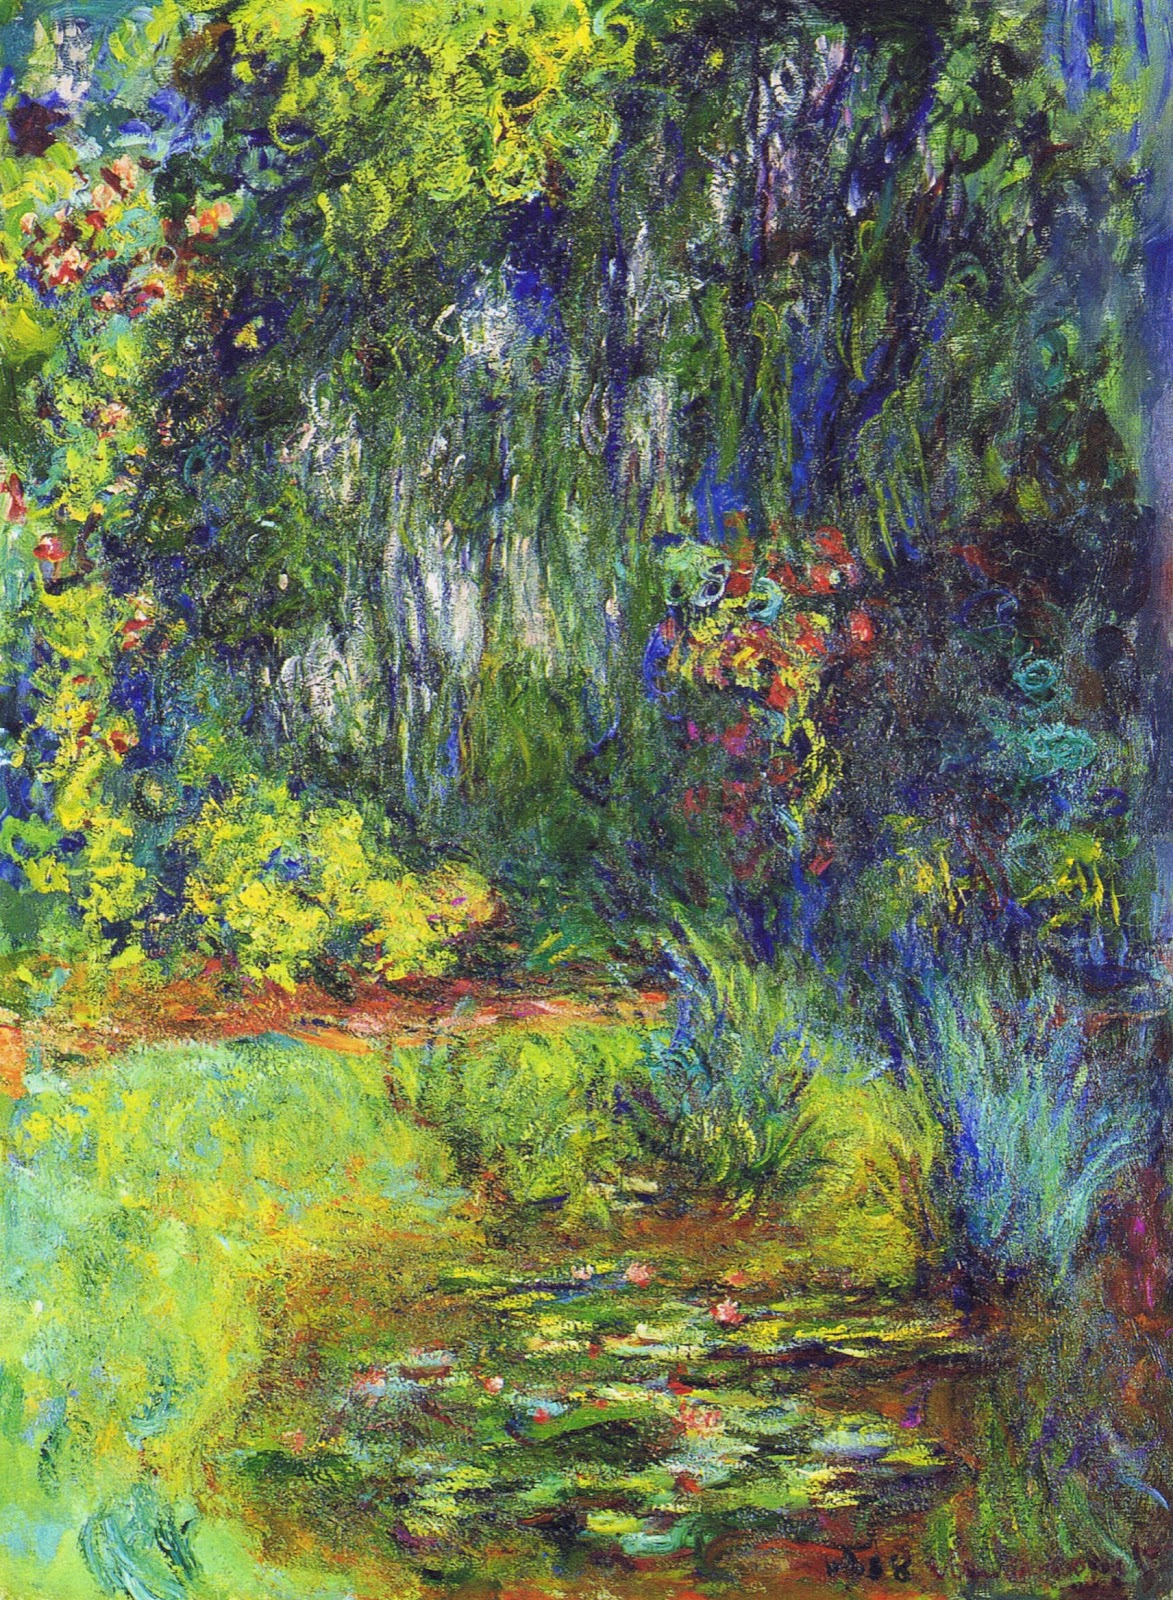 Claude+Monet-1840-1926 (196).jpg